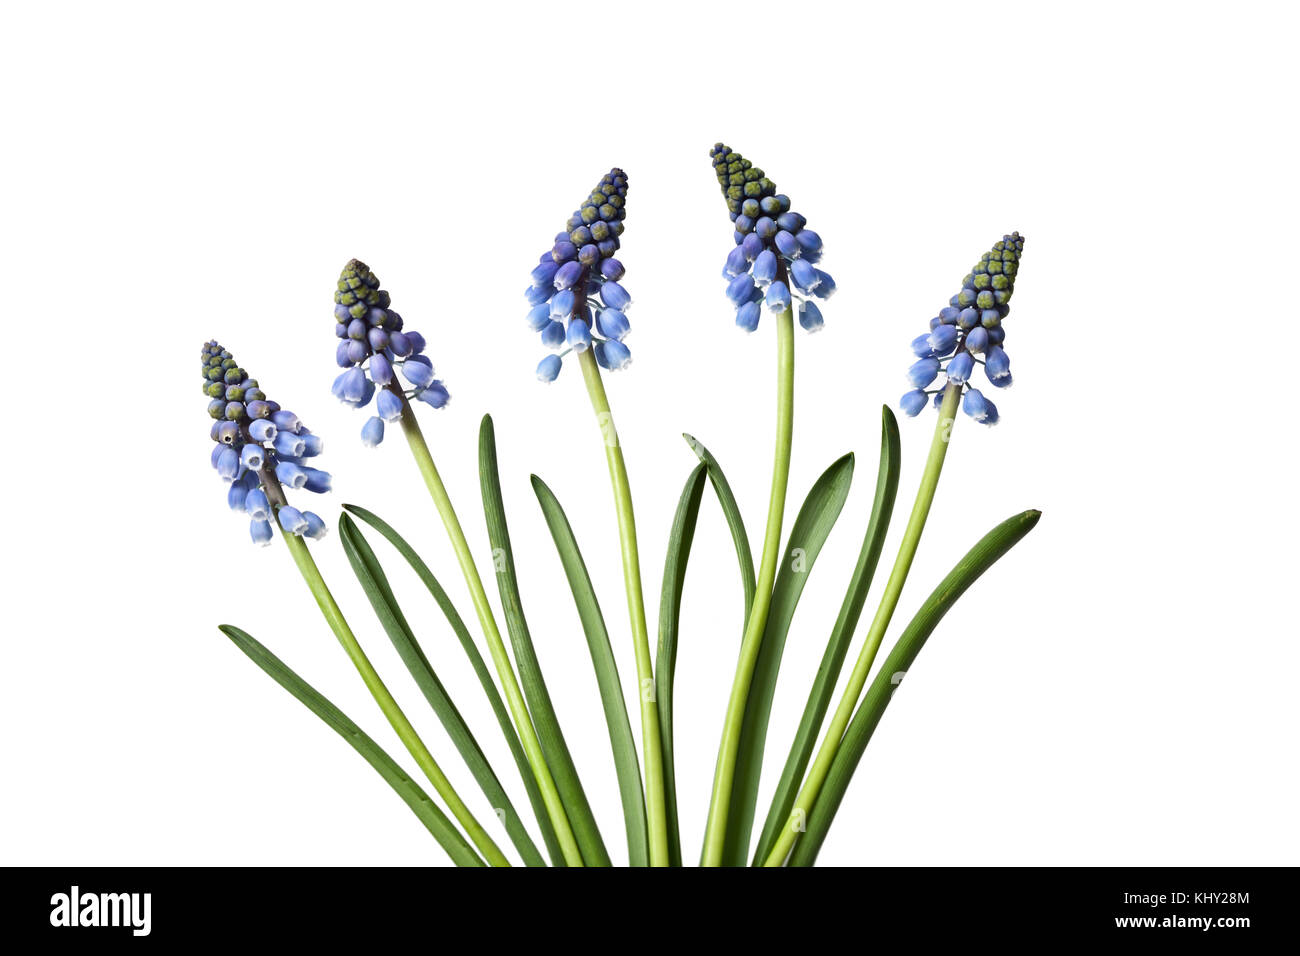 Blue Muscaria Flowers isolated on white background Stock Photo - Alamy